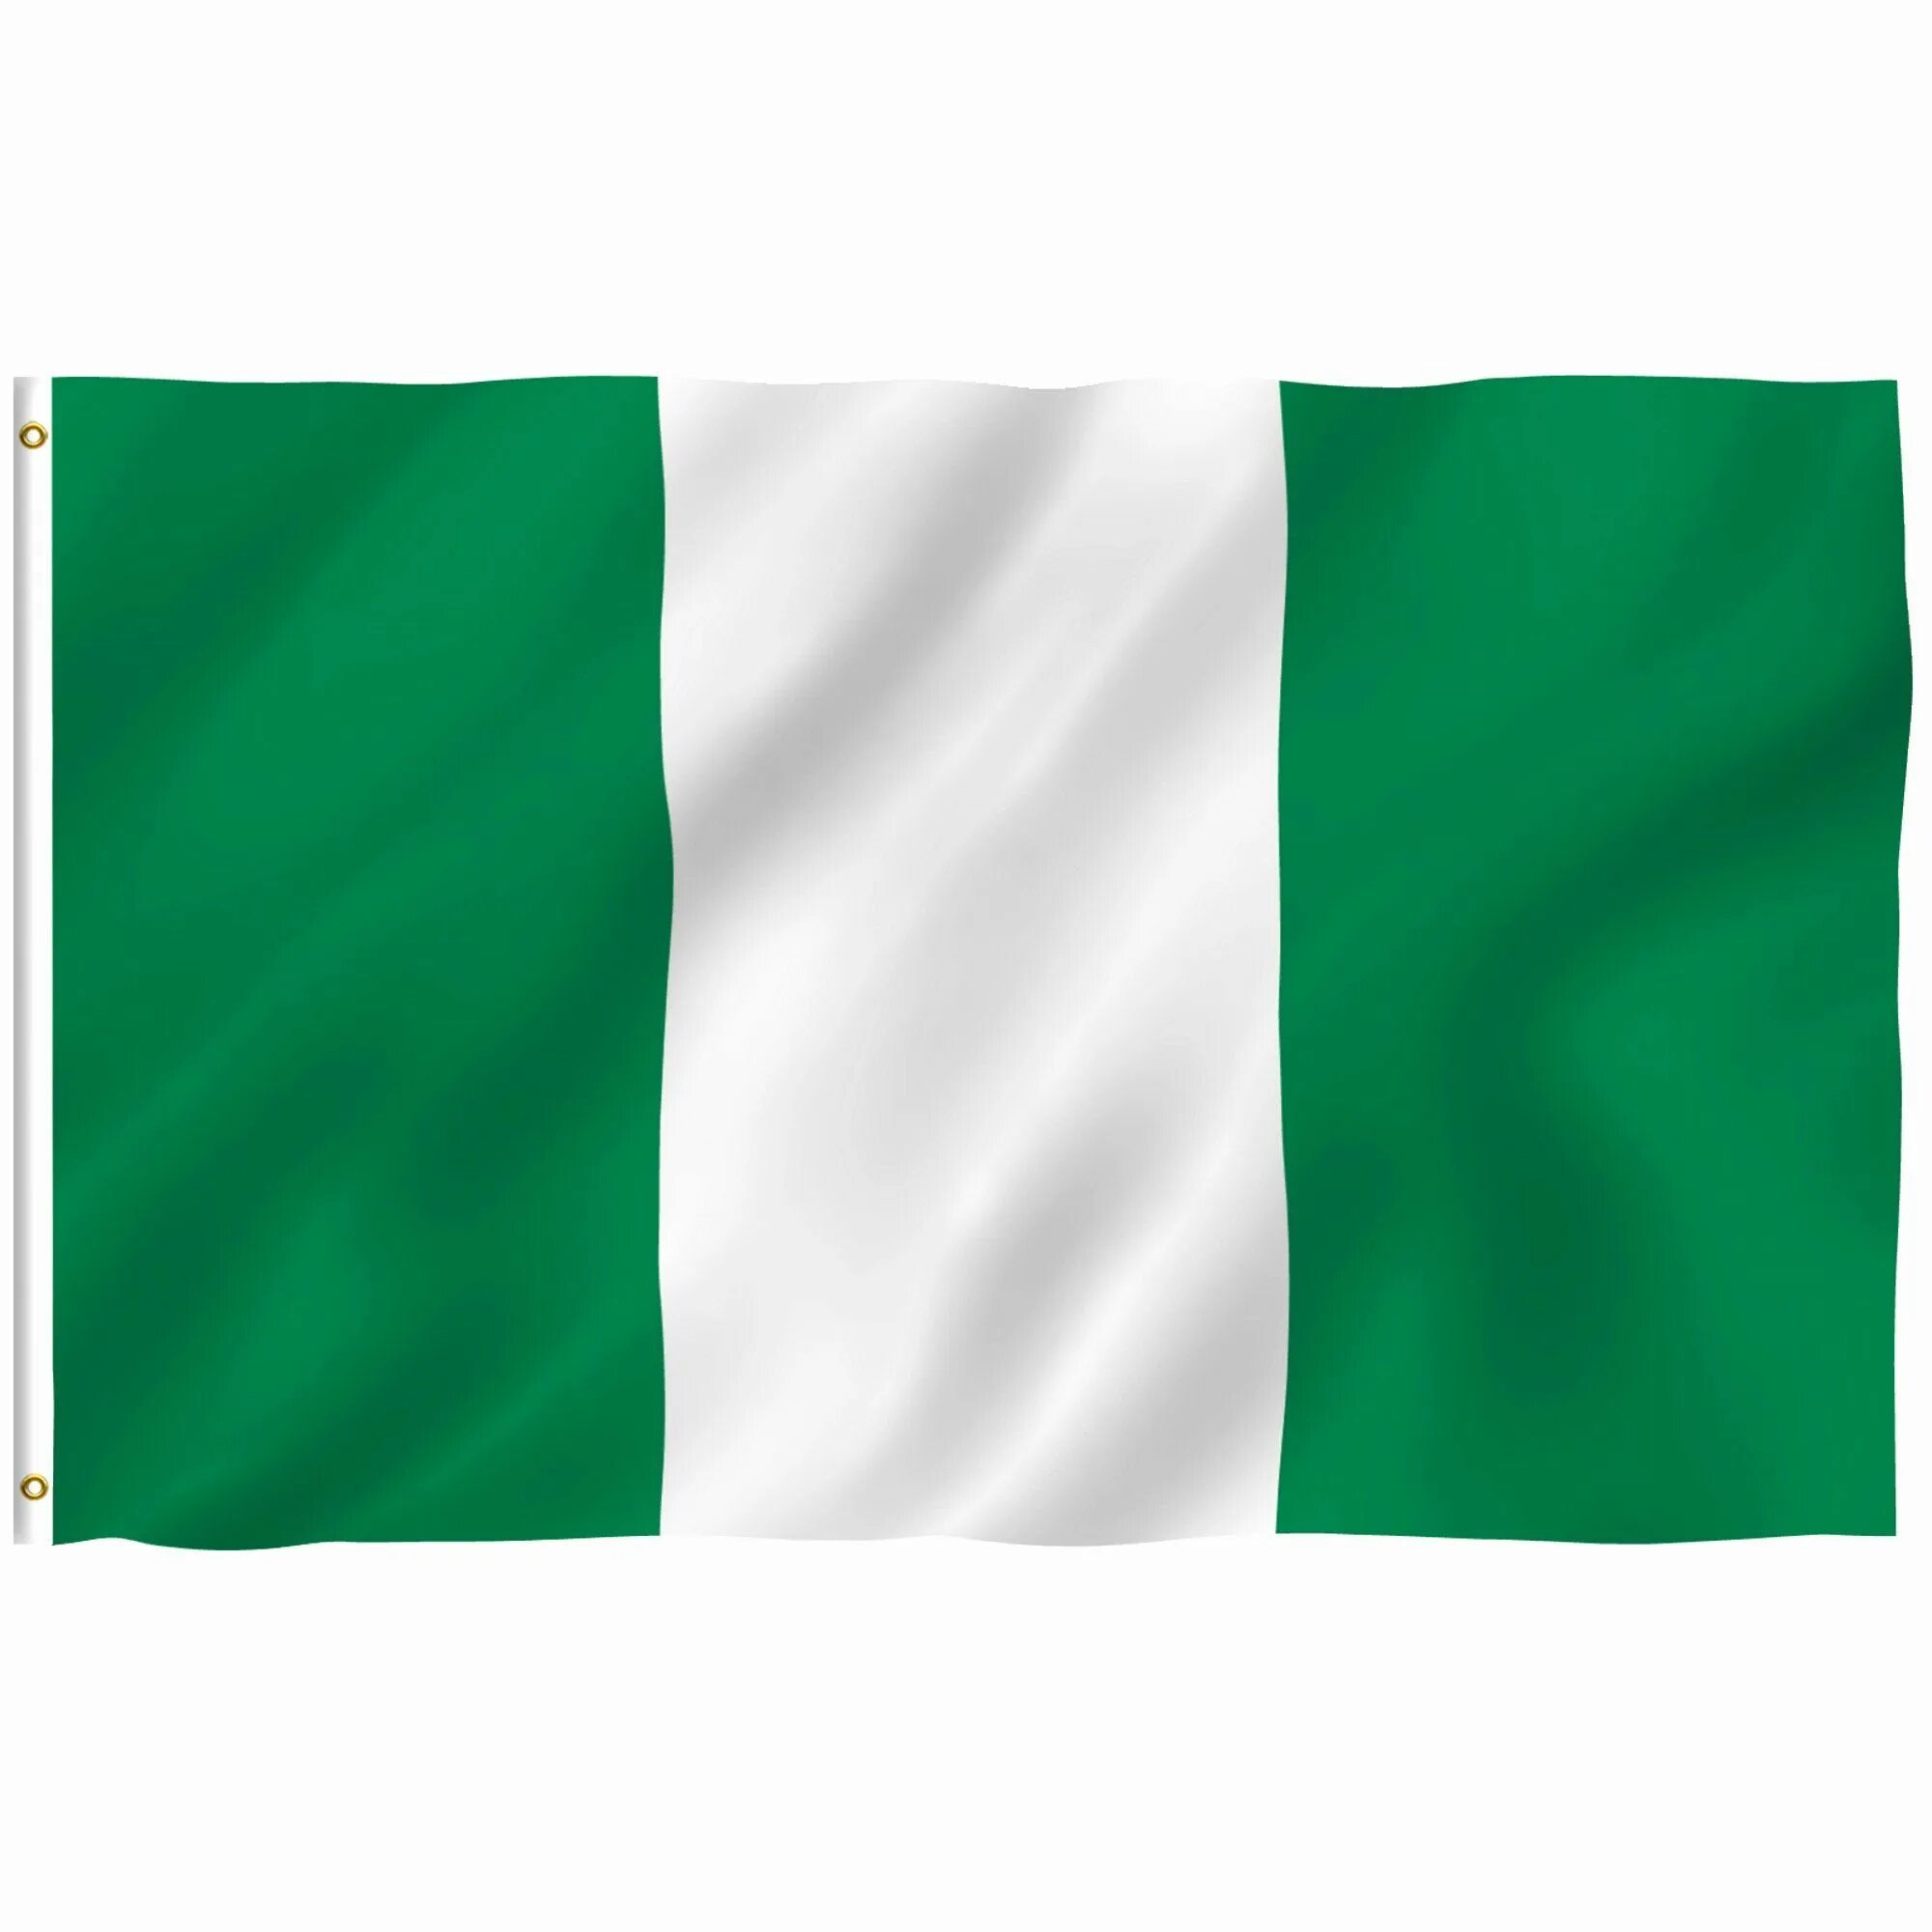 Бело зеленый флаг чей. Флаг Нигерии. Зеленый флаг. Бело зеленый флаг. Флаг зелёный белый зелёный.